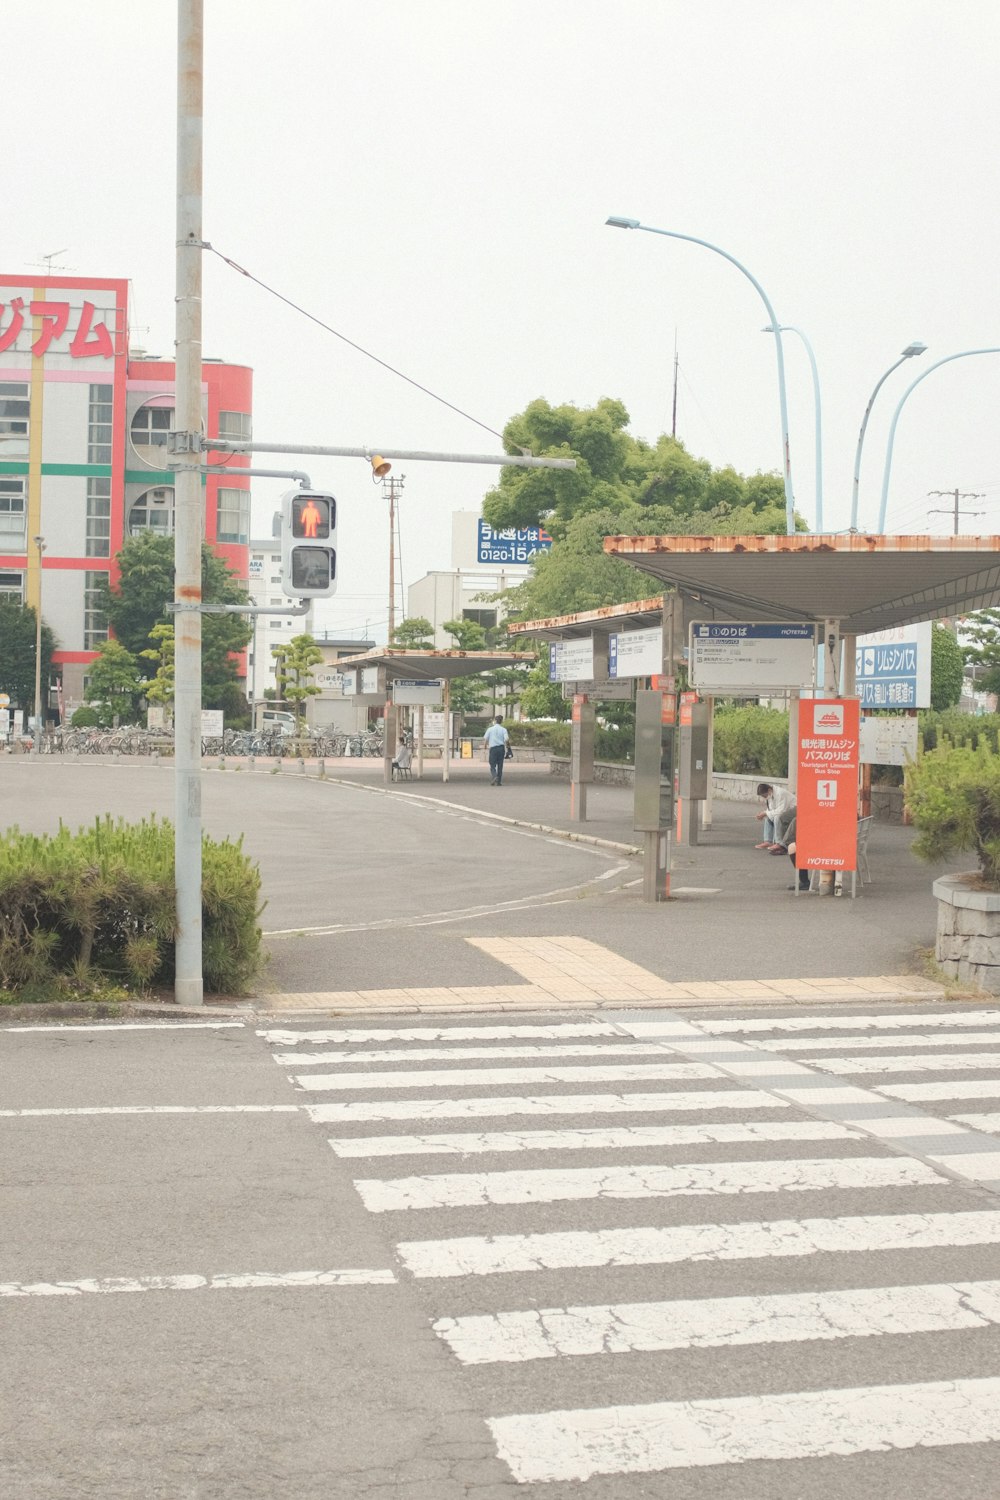 pedestrian lane with traffic light